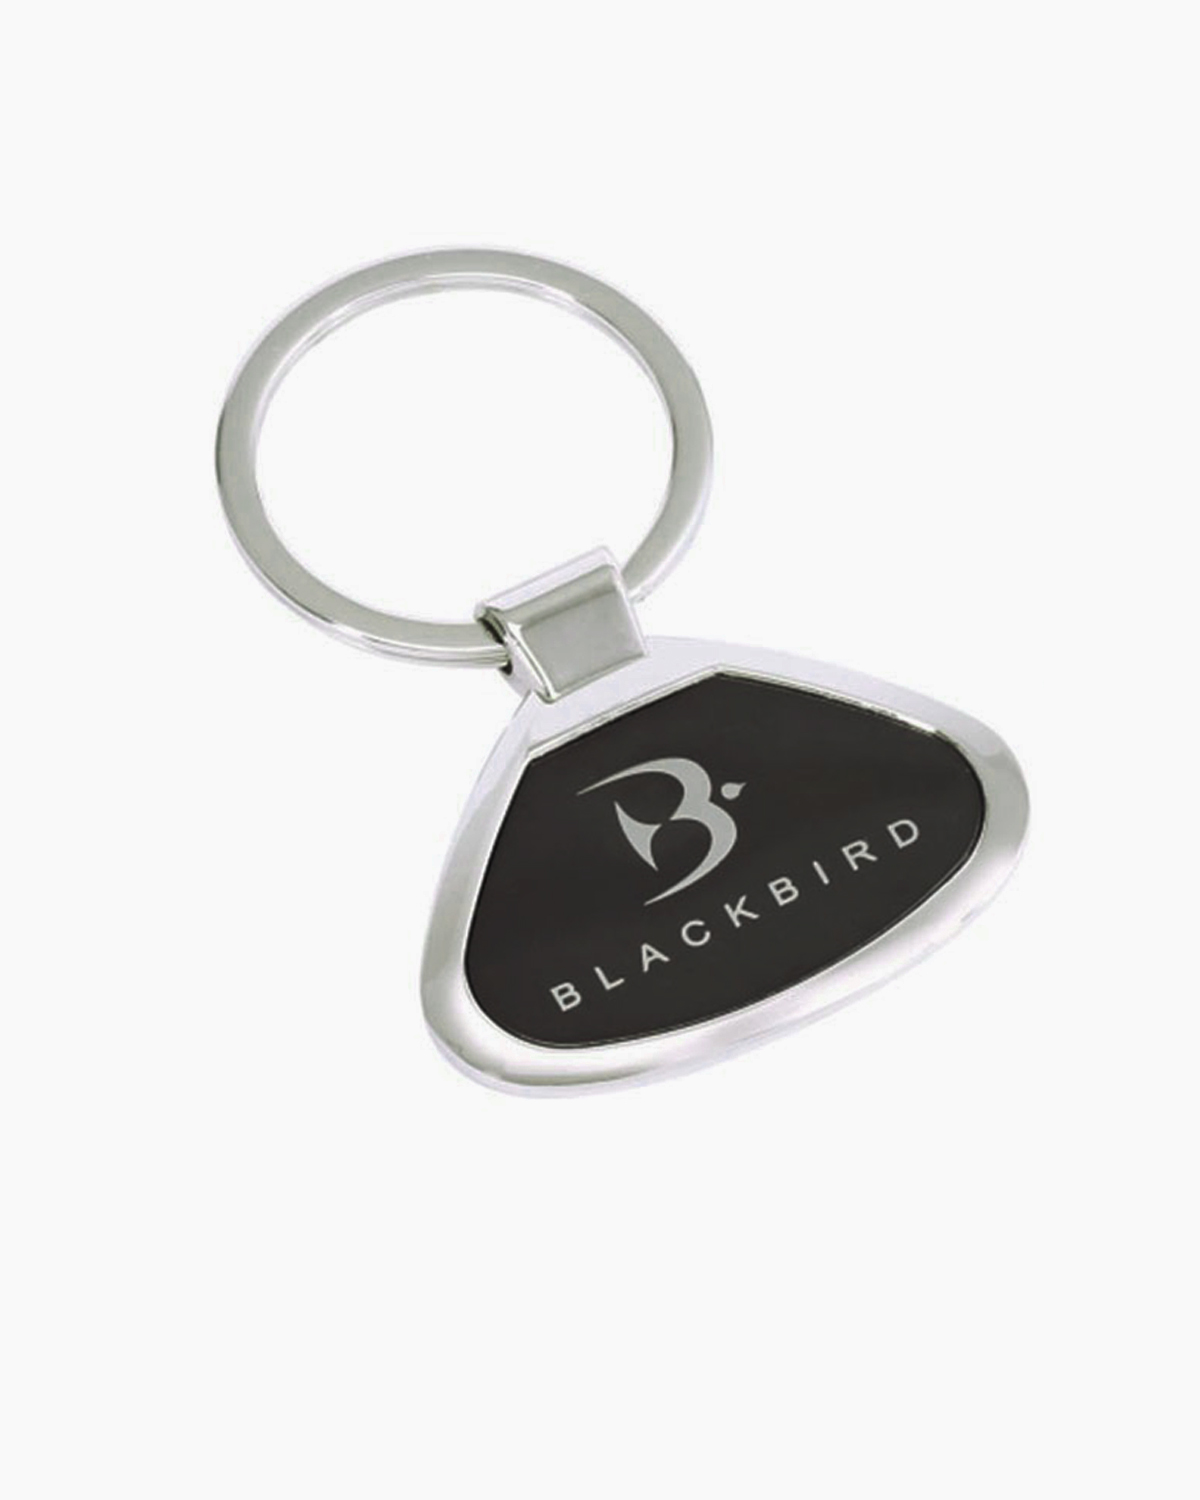 Personalized Acrylic Key Tags, Custom Name, Key Chain, Key Ring Love Gifts  | eBay